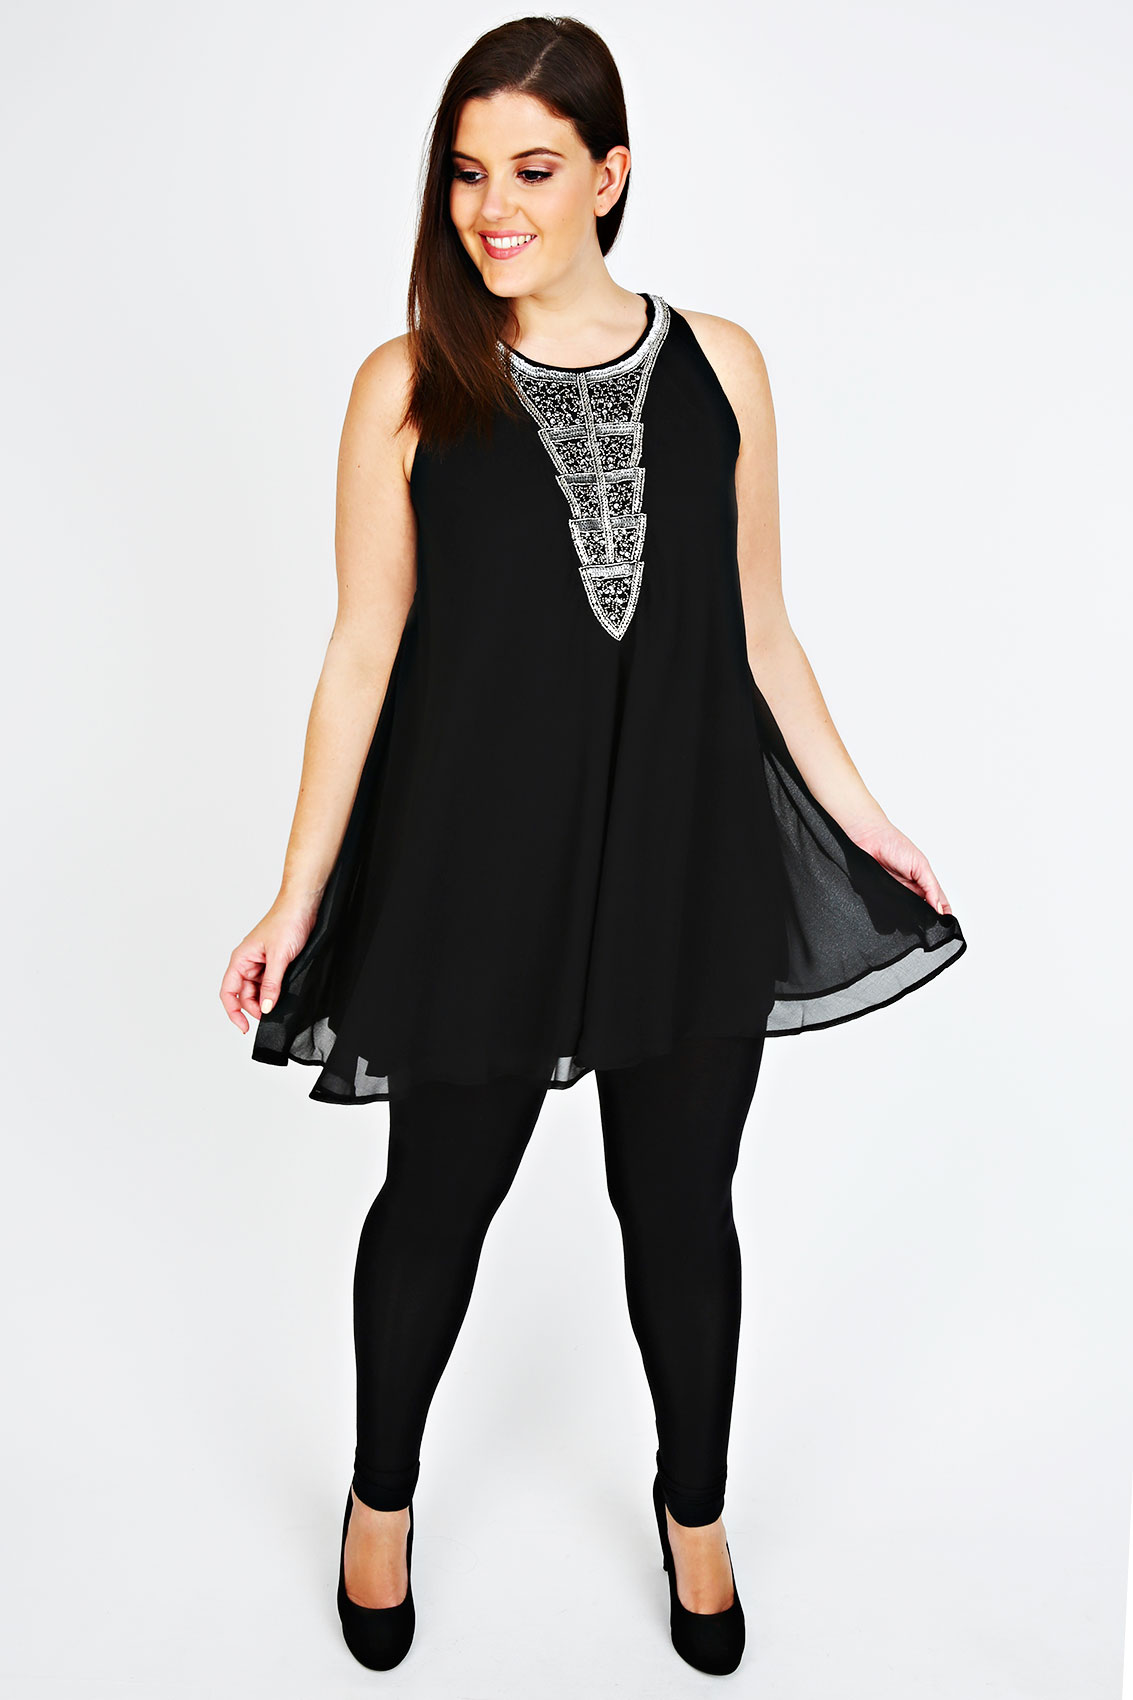 Black Chiffon Sleeveless Dress With Silver Embellishment plus size 16 ...